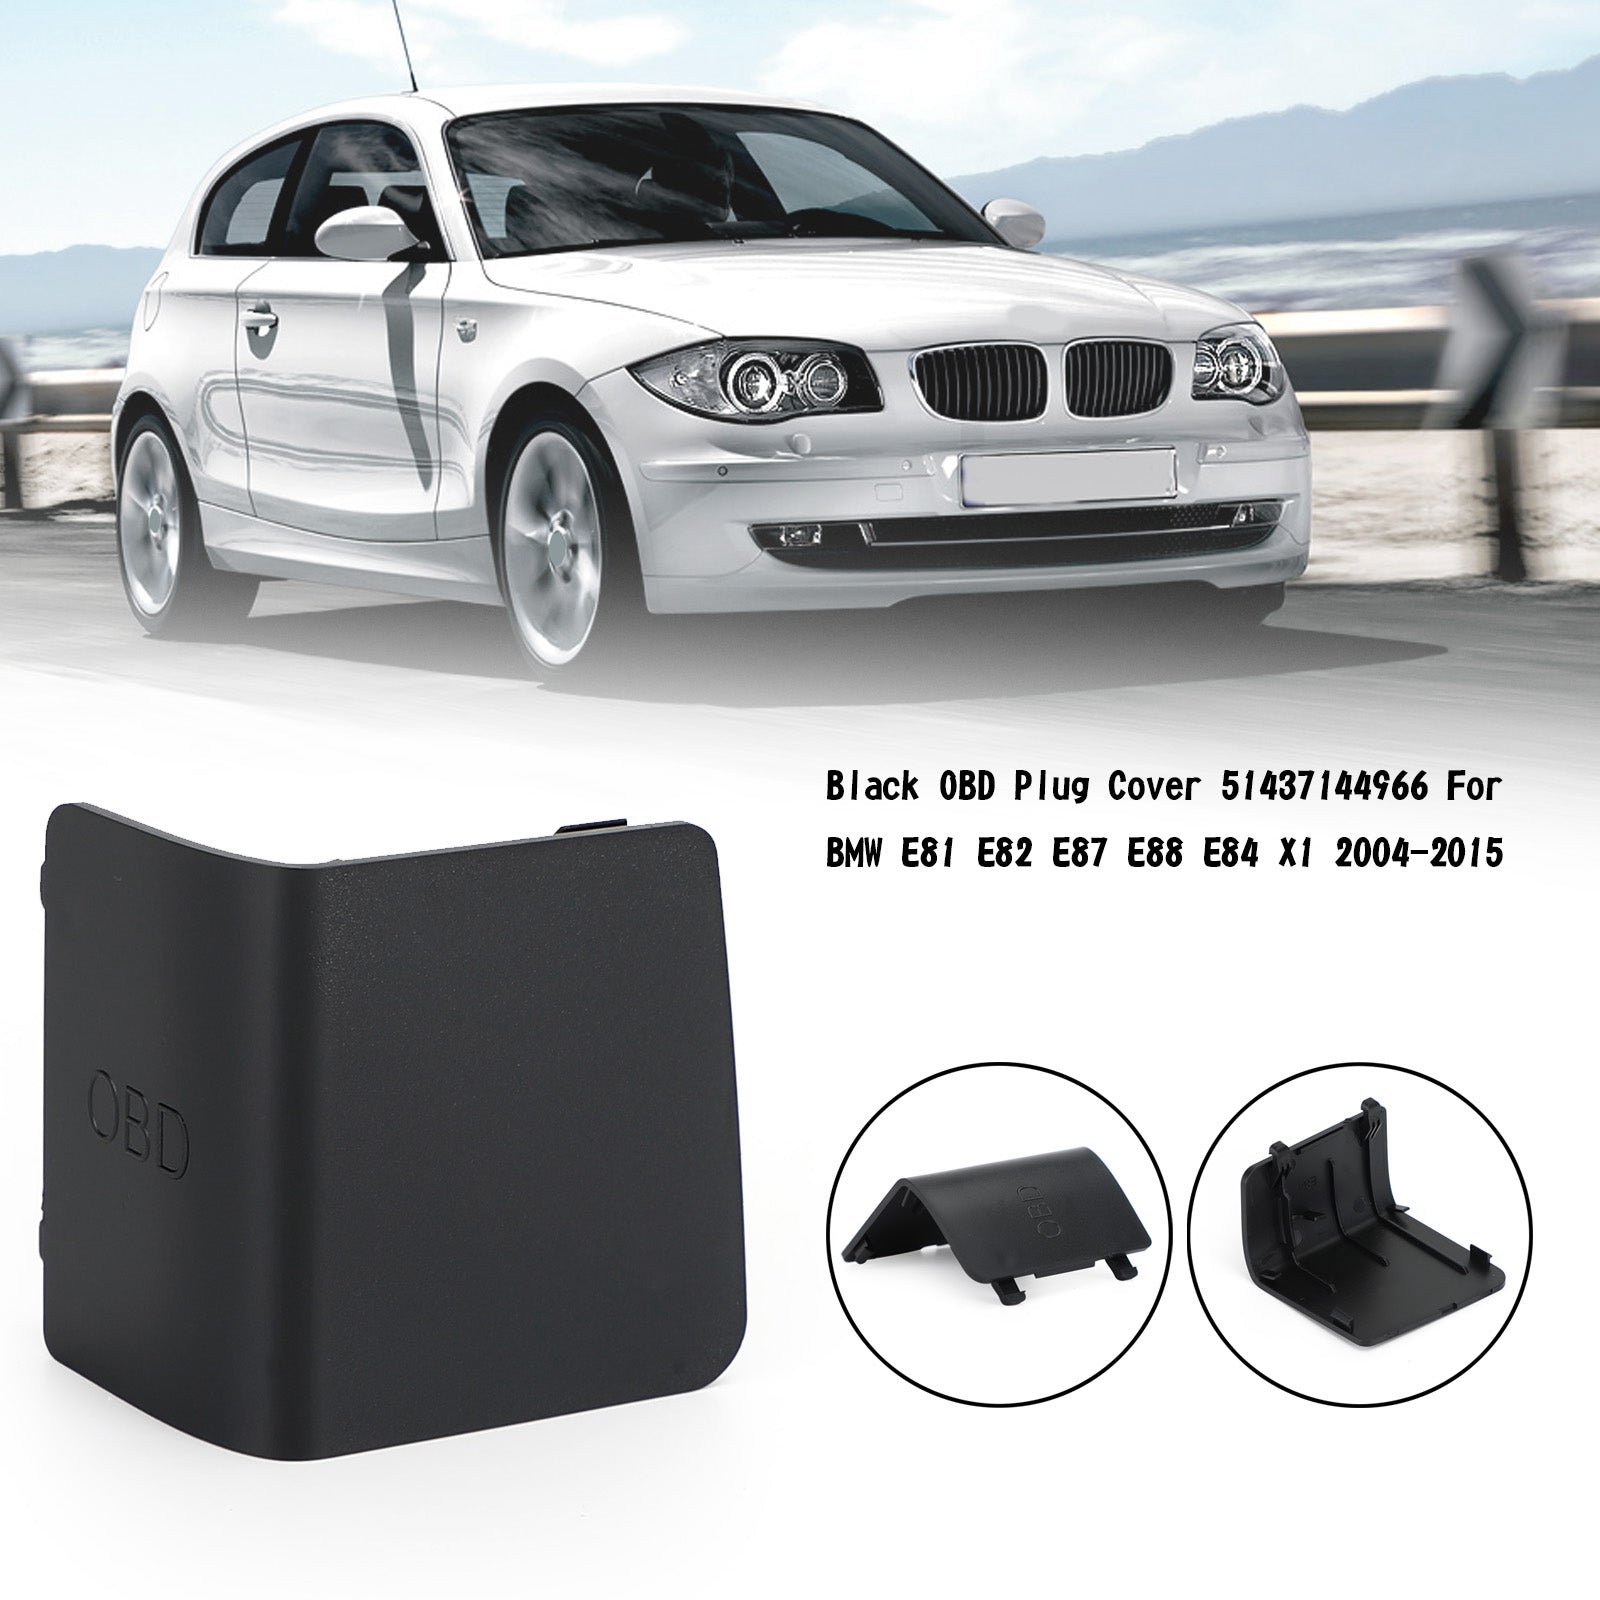 LHD Black OBD Plug Cover 51437144966 For BMW E81 E82 E87 E88 E84 X1 2004-2015